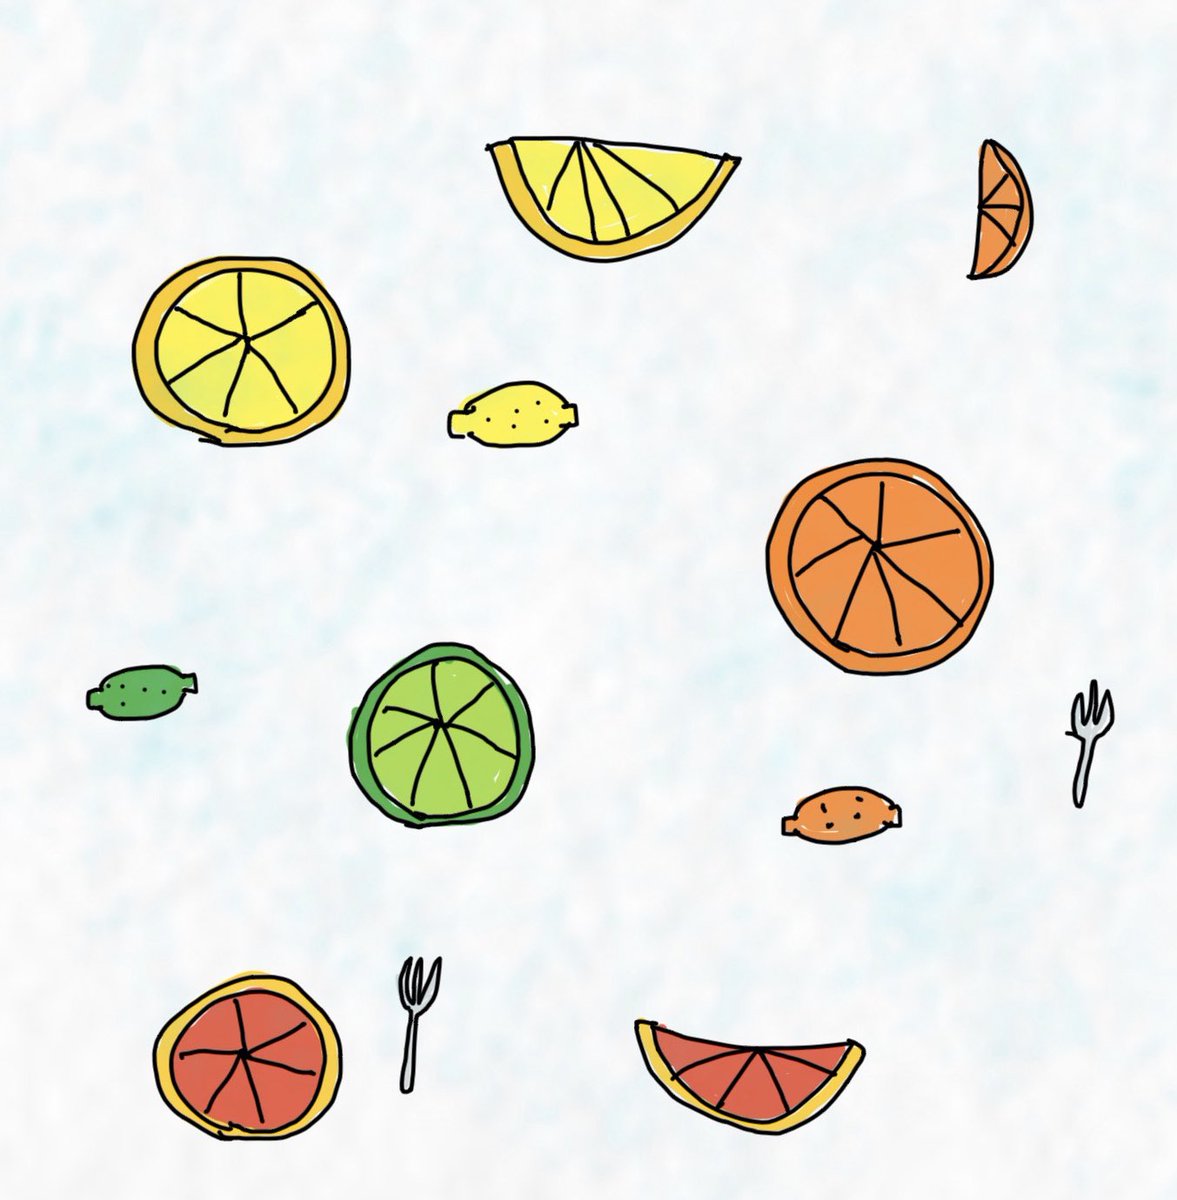 Mikakodrawings Lemon Lime Grapefruit And Orange レモン ライム グレープフルーツとオレンジ Modernart Drawingchallenge Illustrationartist Lemonlime Citrusfruit イラスト好きな人と繋がりたい イラストレーターさんと繋がりたい